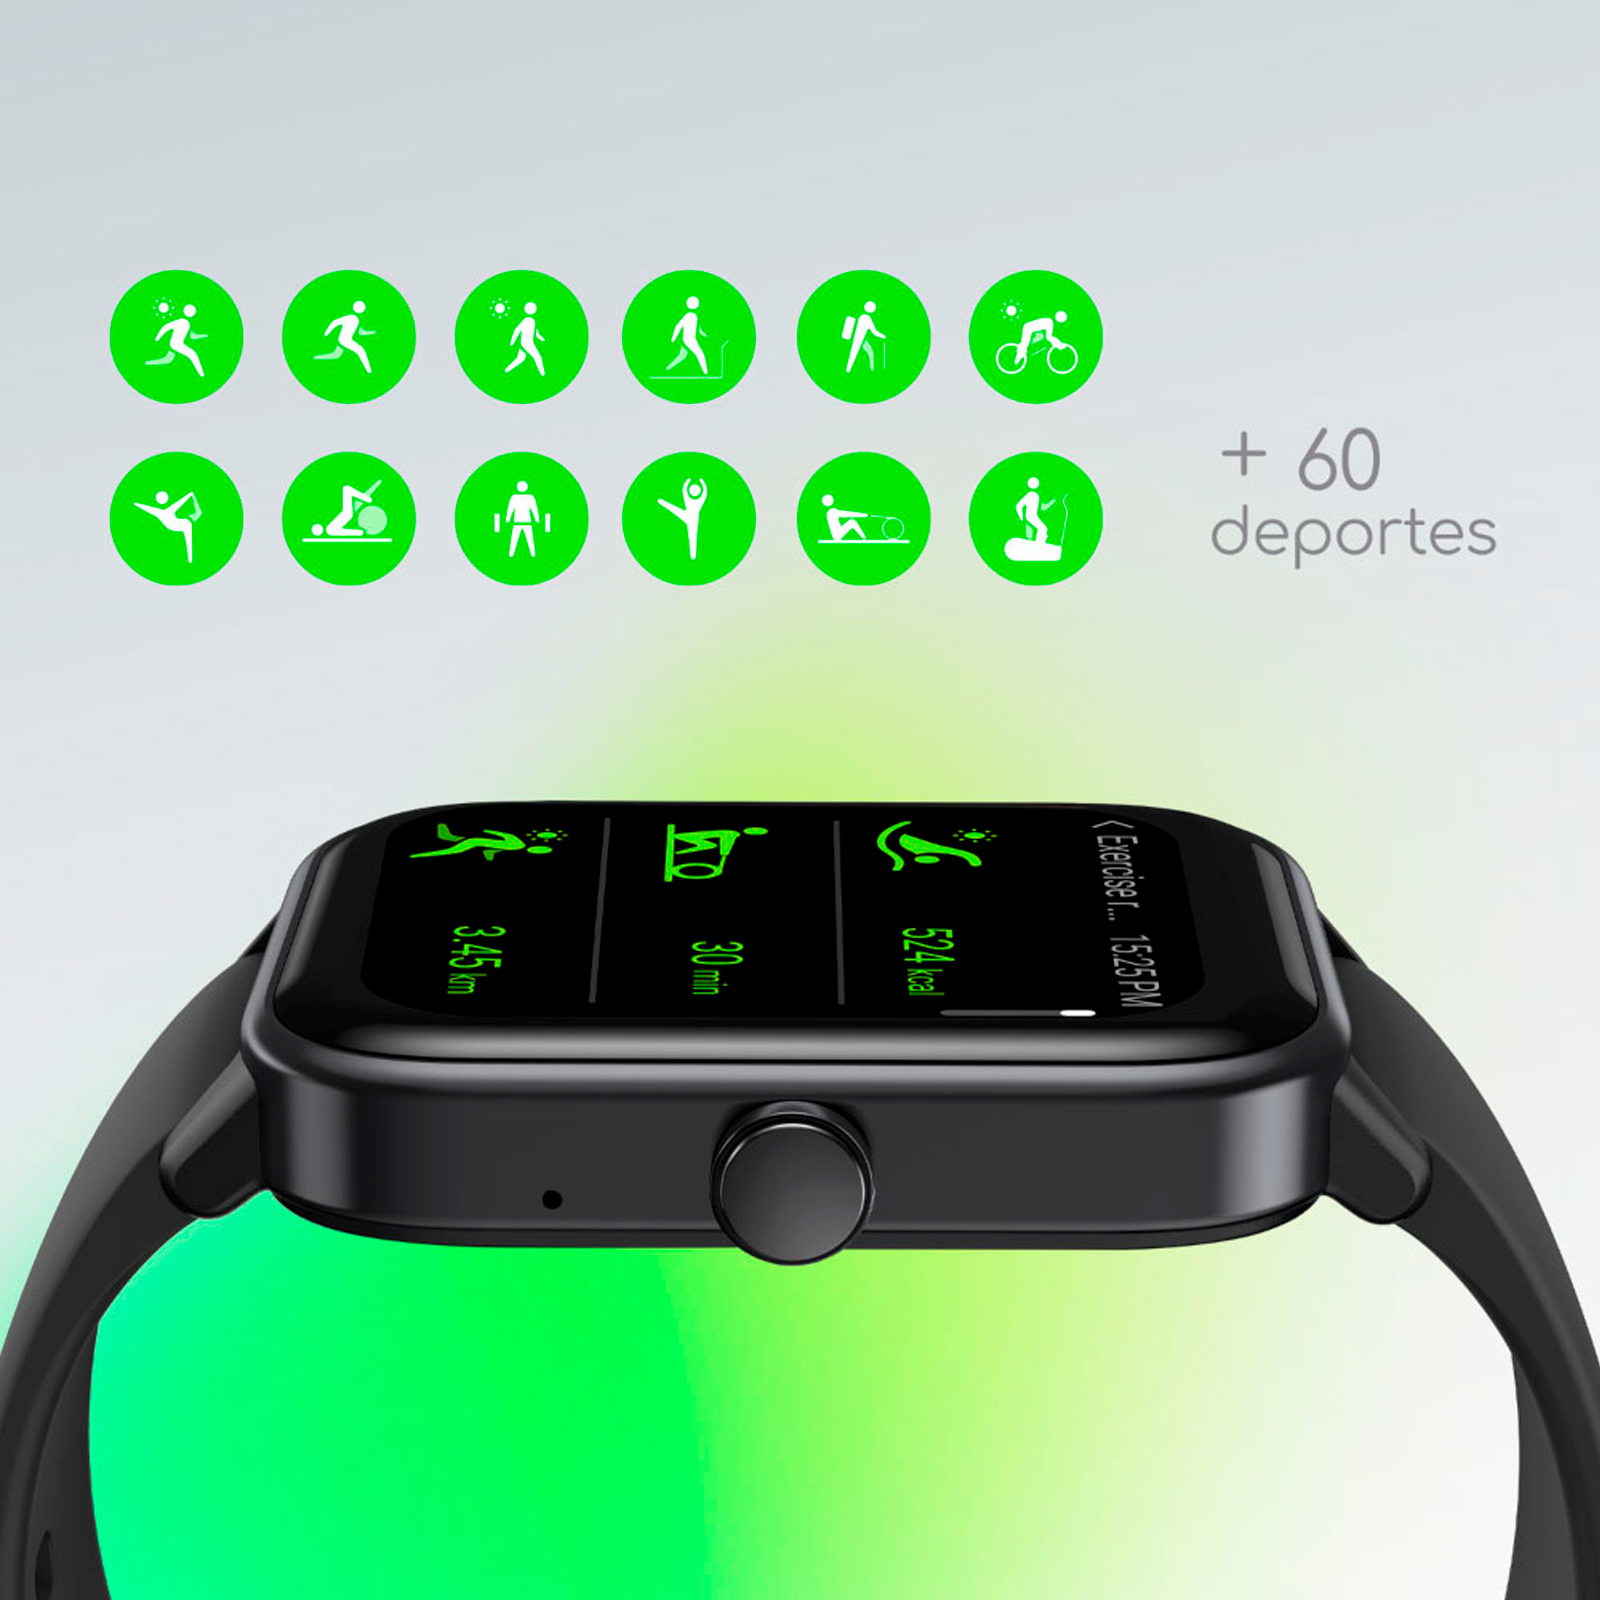 Smartwatch CUBITT CT2 PRO MAX Plateado